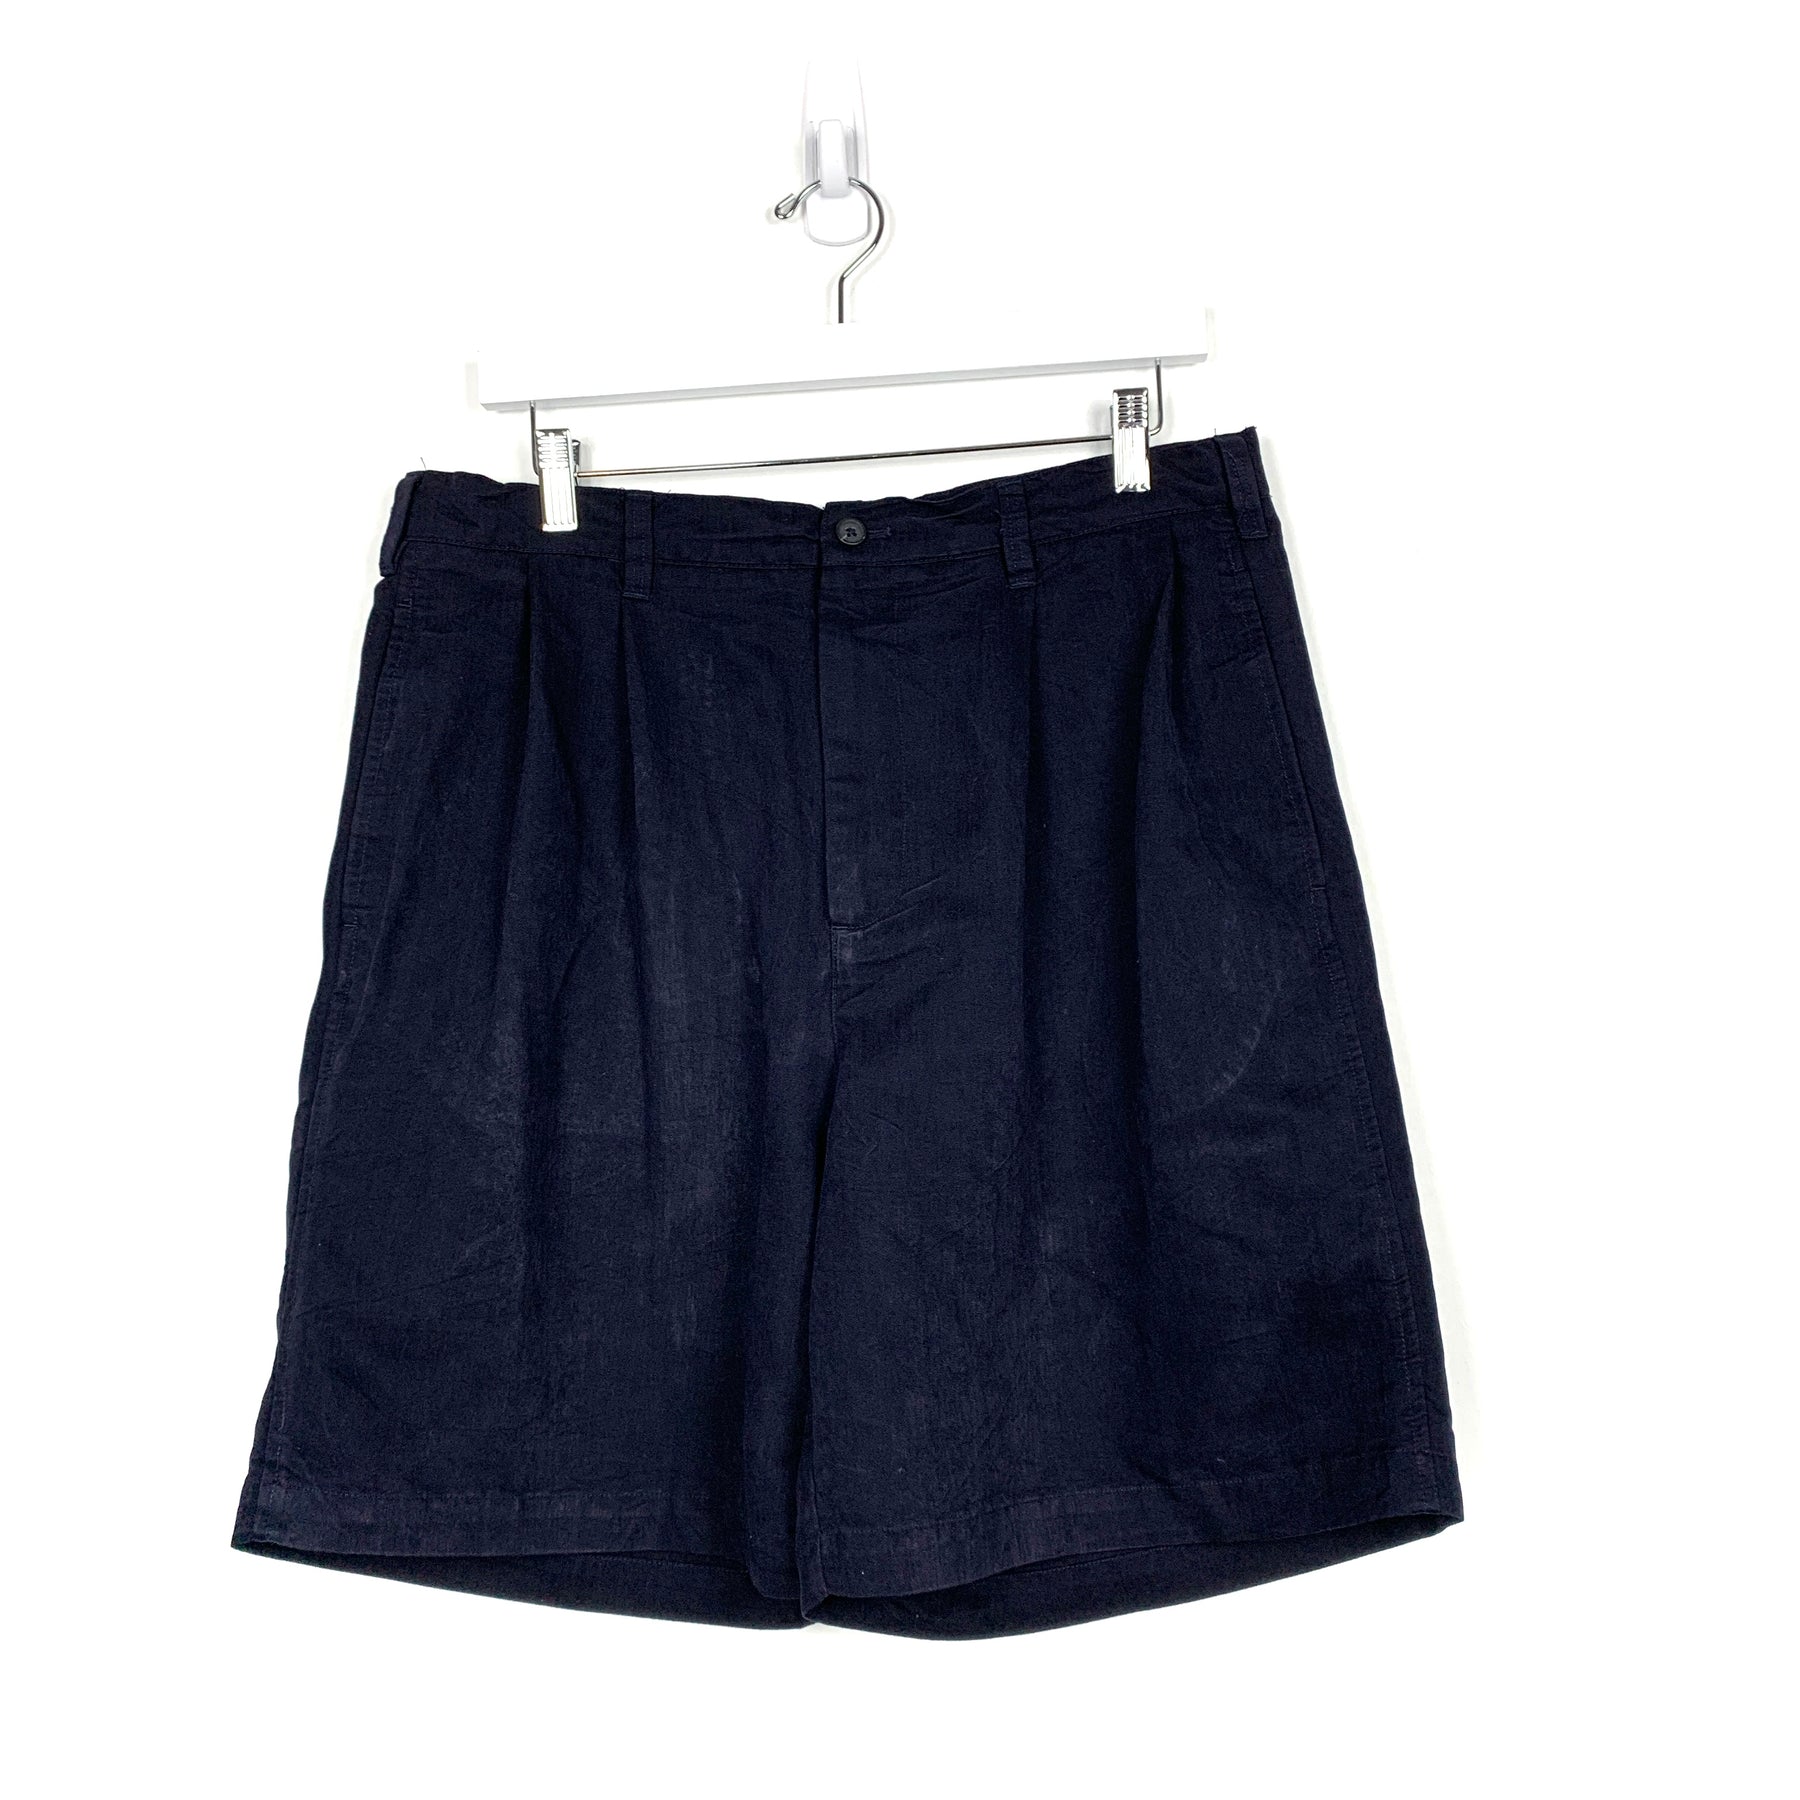 Vintage Chaps Ralph Lauren Chino Shorts - Men's 34